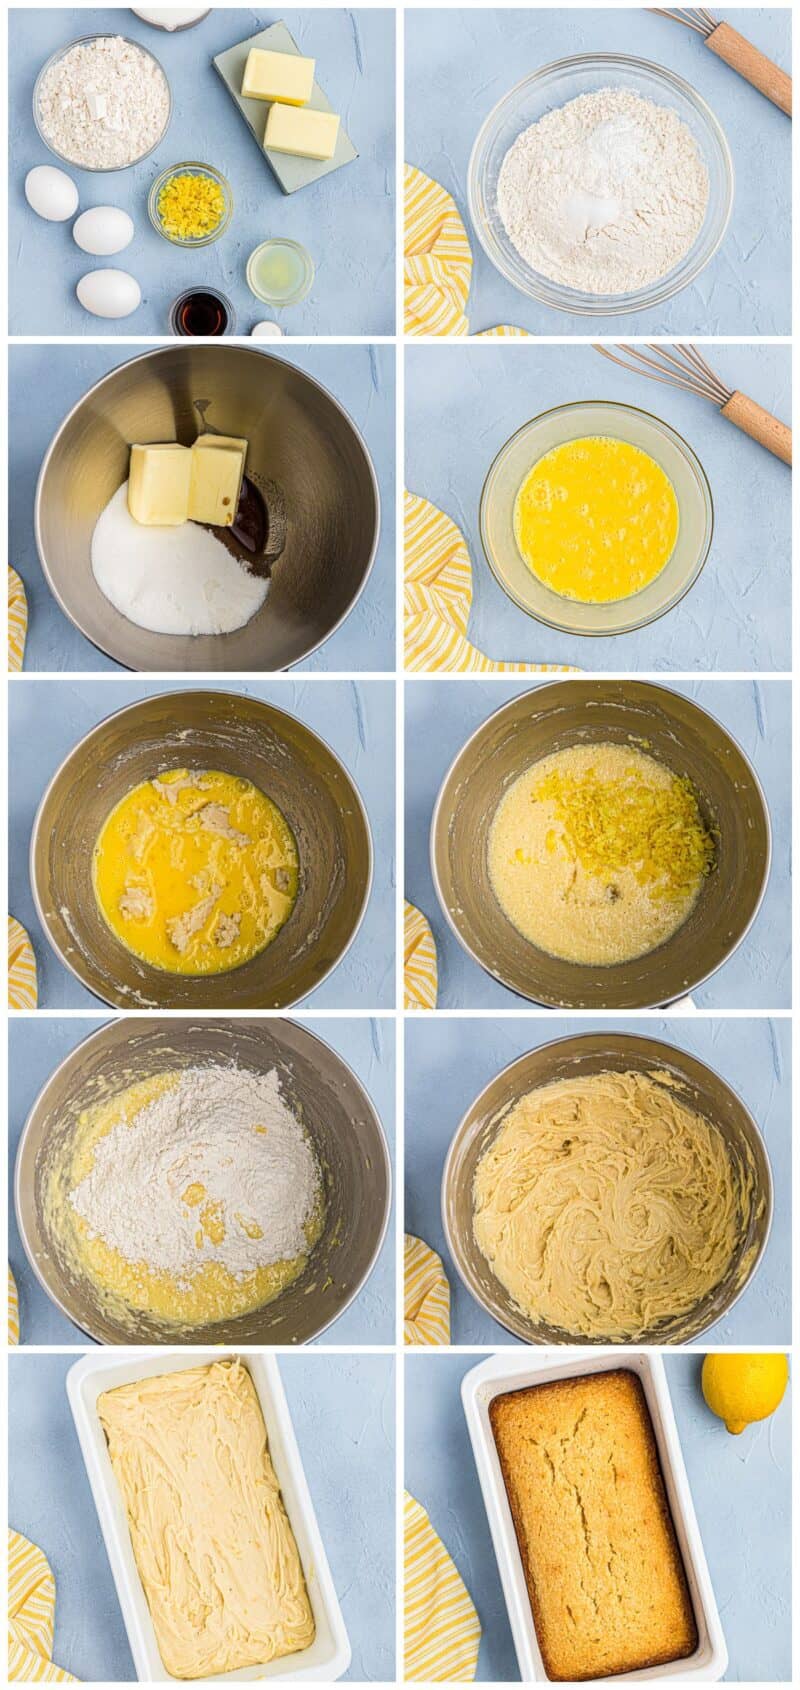 lemon pound cake step by step recipe photos